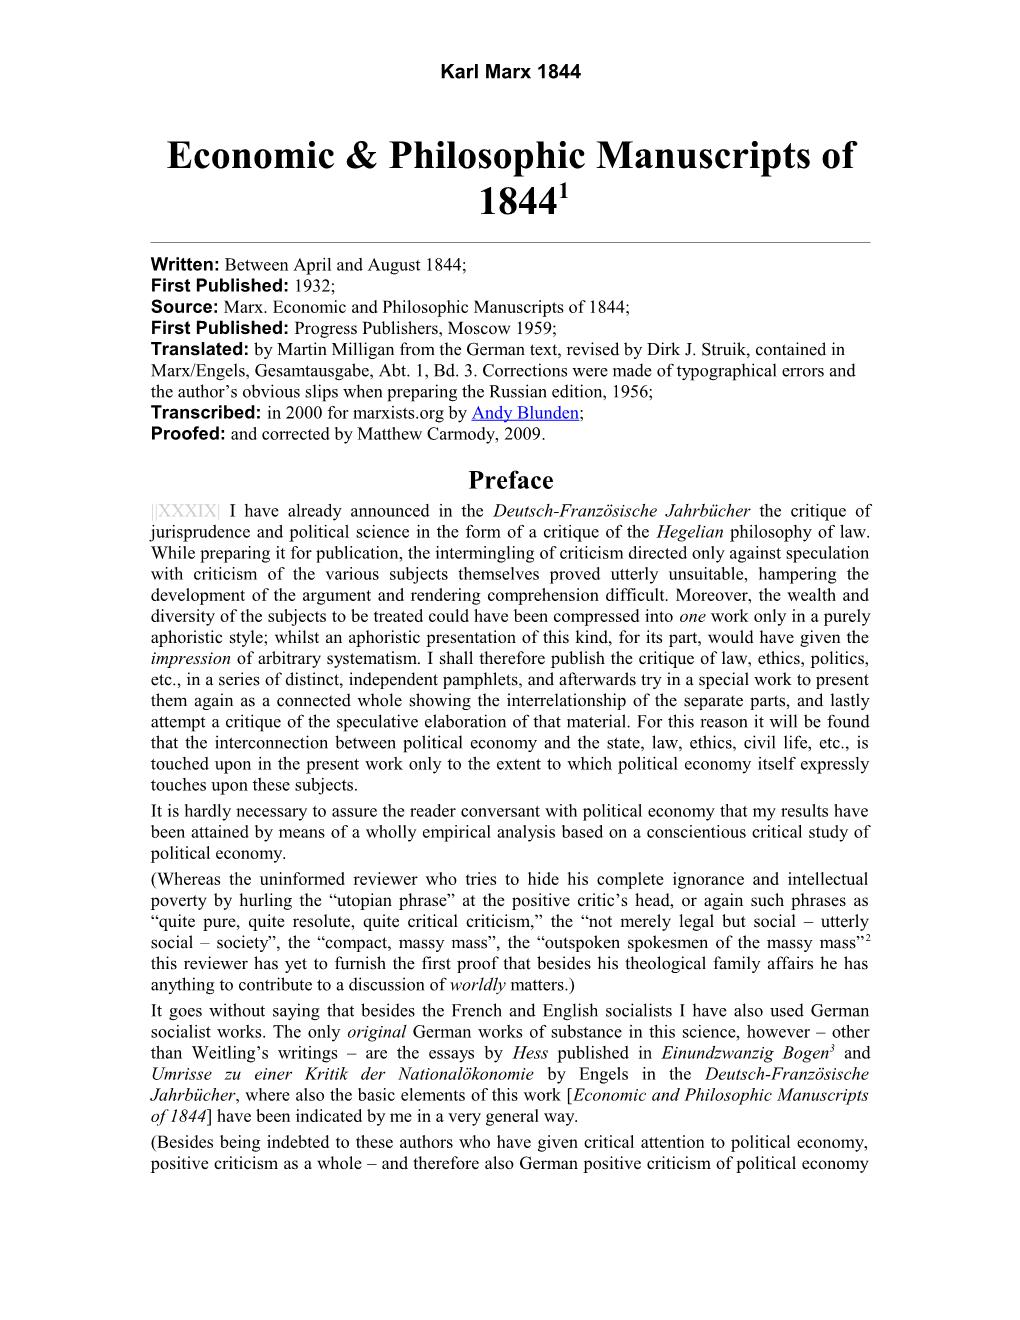 2 Economic and Philosophic Manuscripts of 1844. Preface